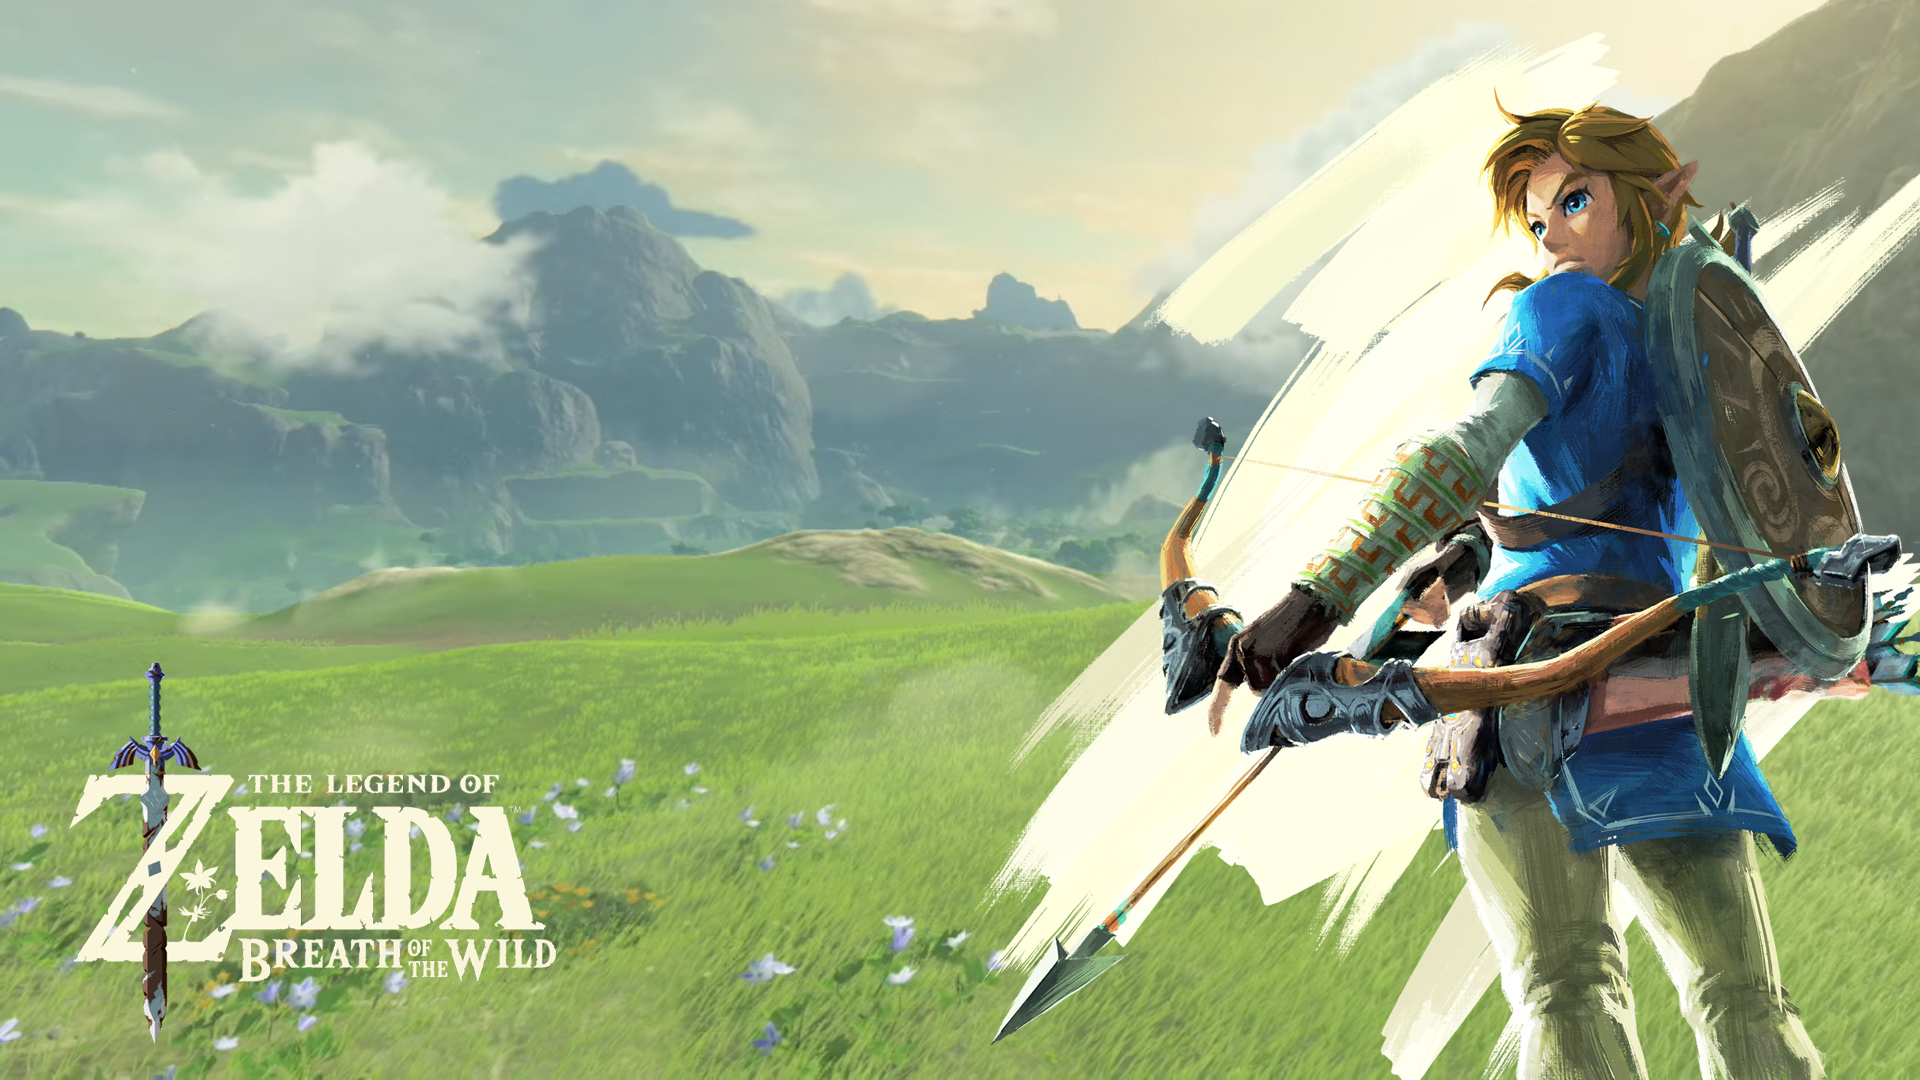 Video Game The Legend of Zelda: Breath of the Wild HD Wallpaper by heisenburger